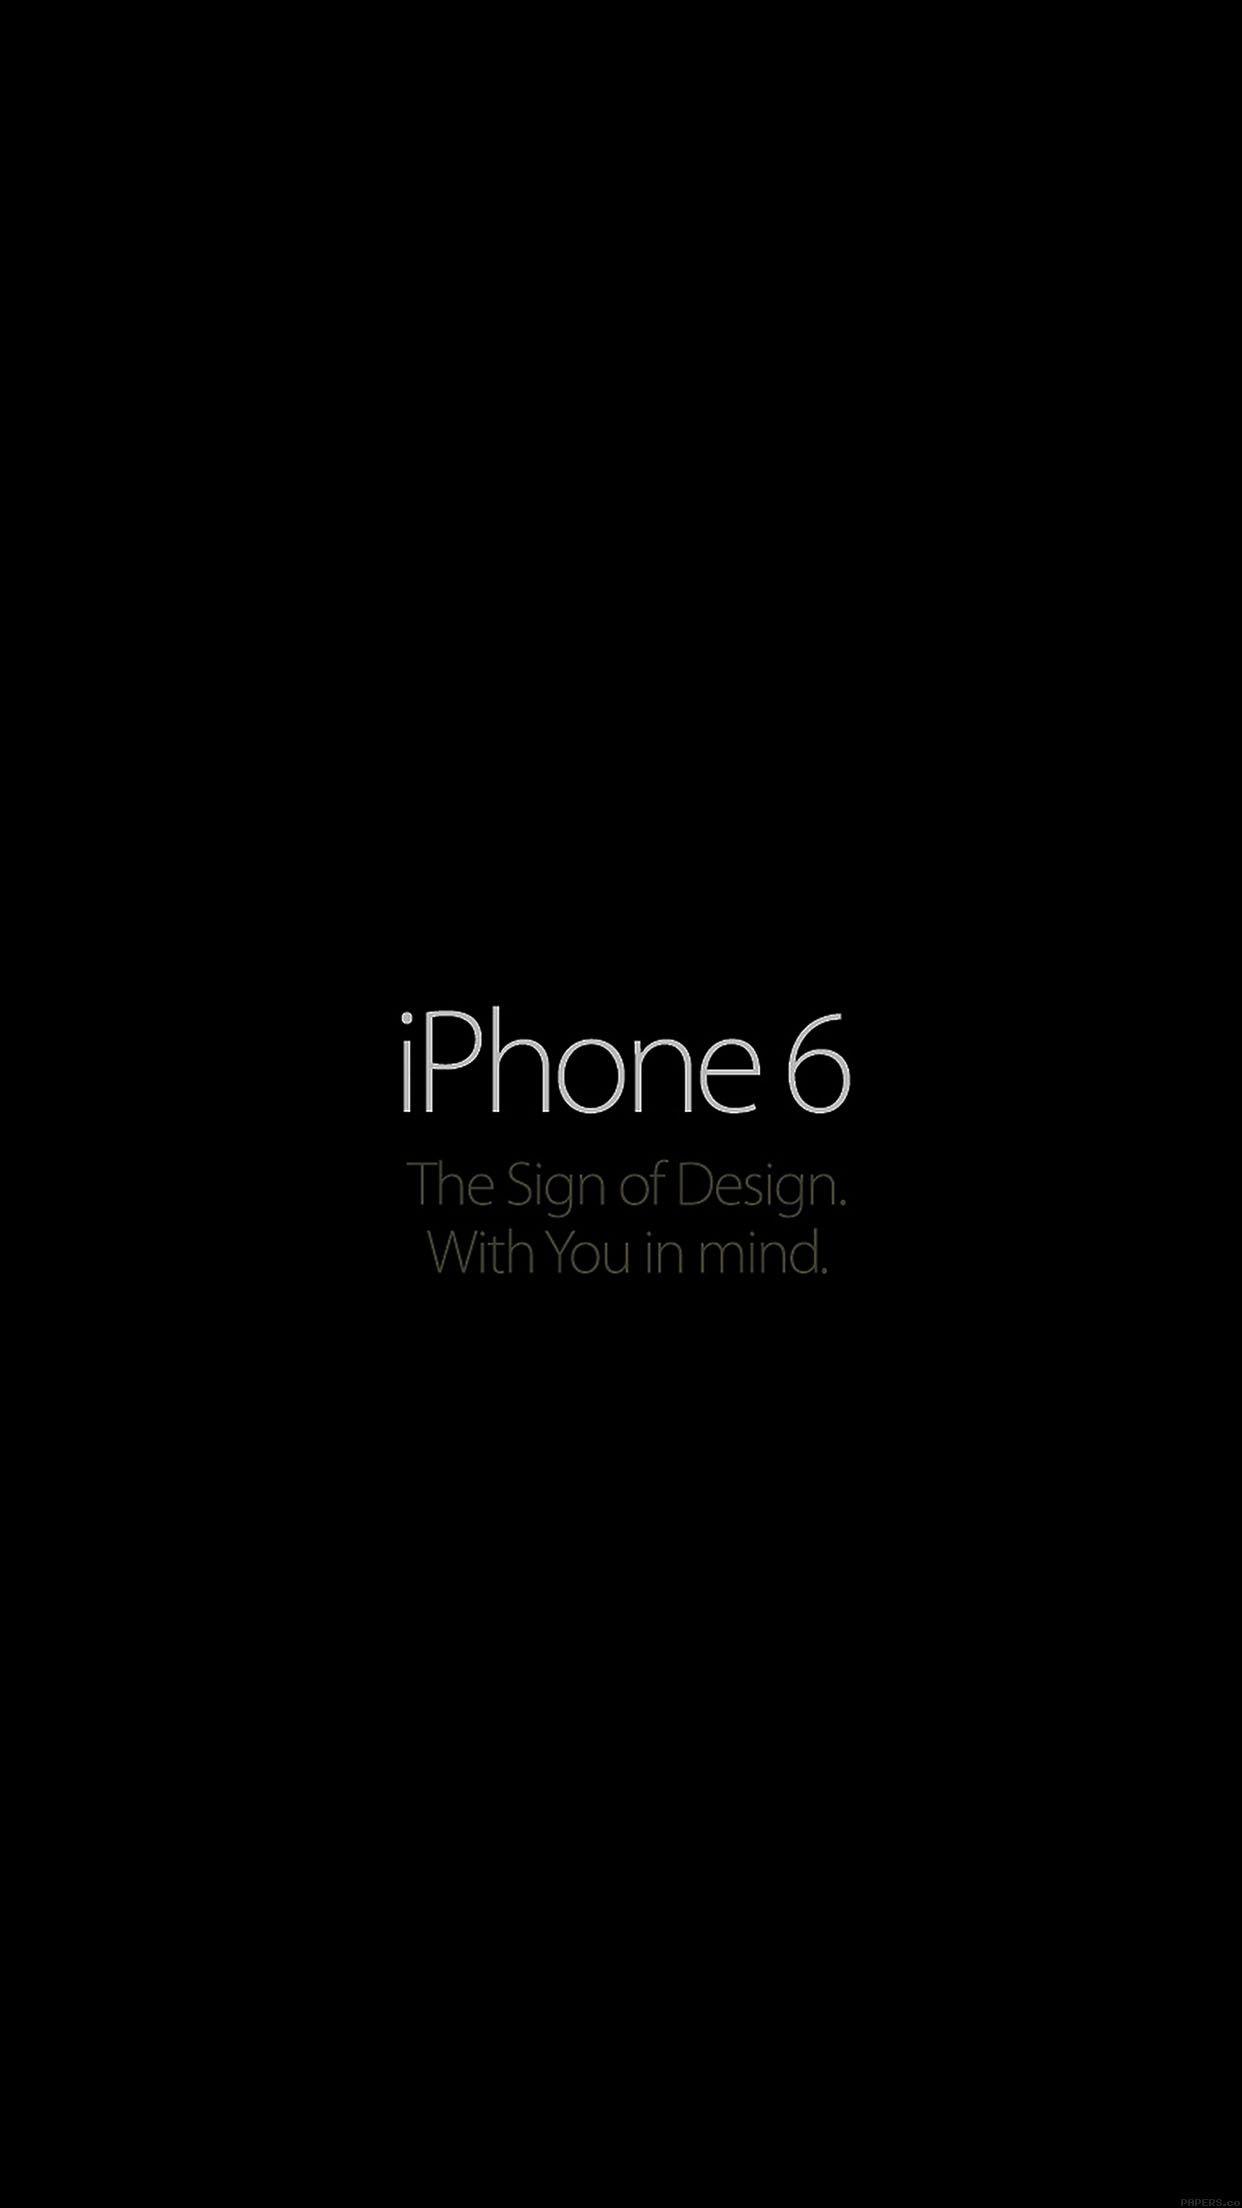 iPhone 6 Logo - iPhone7papers - ac59-wallpaper-iphone6-dark-logo-apple